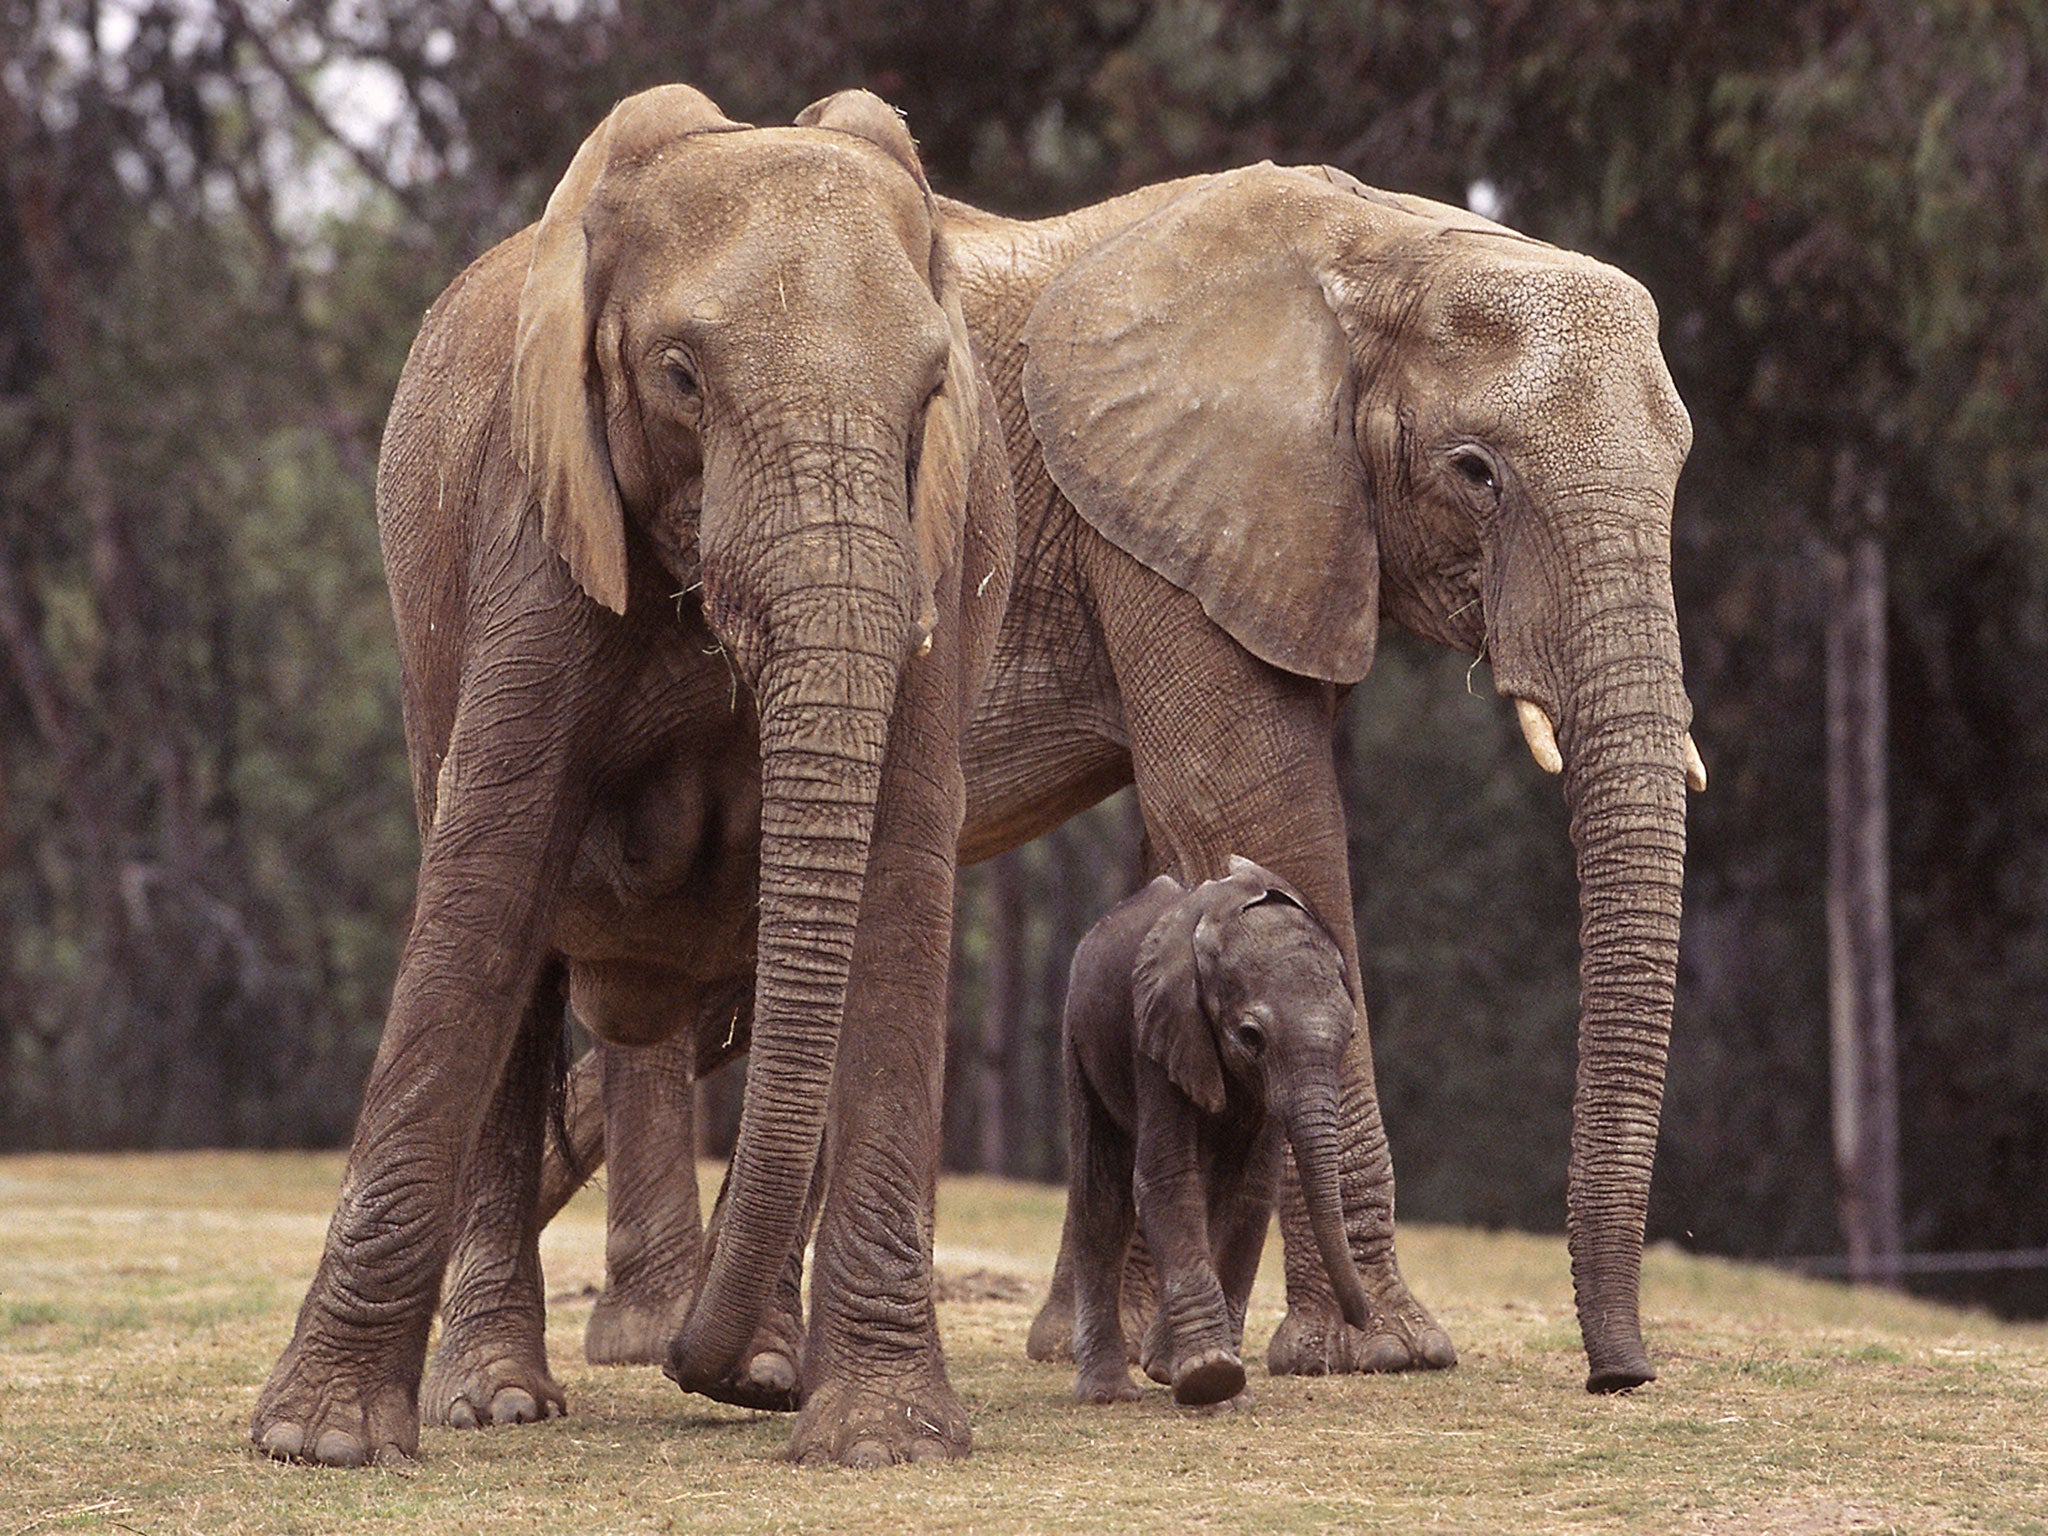 Elephants could soon be extinct